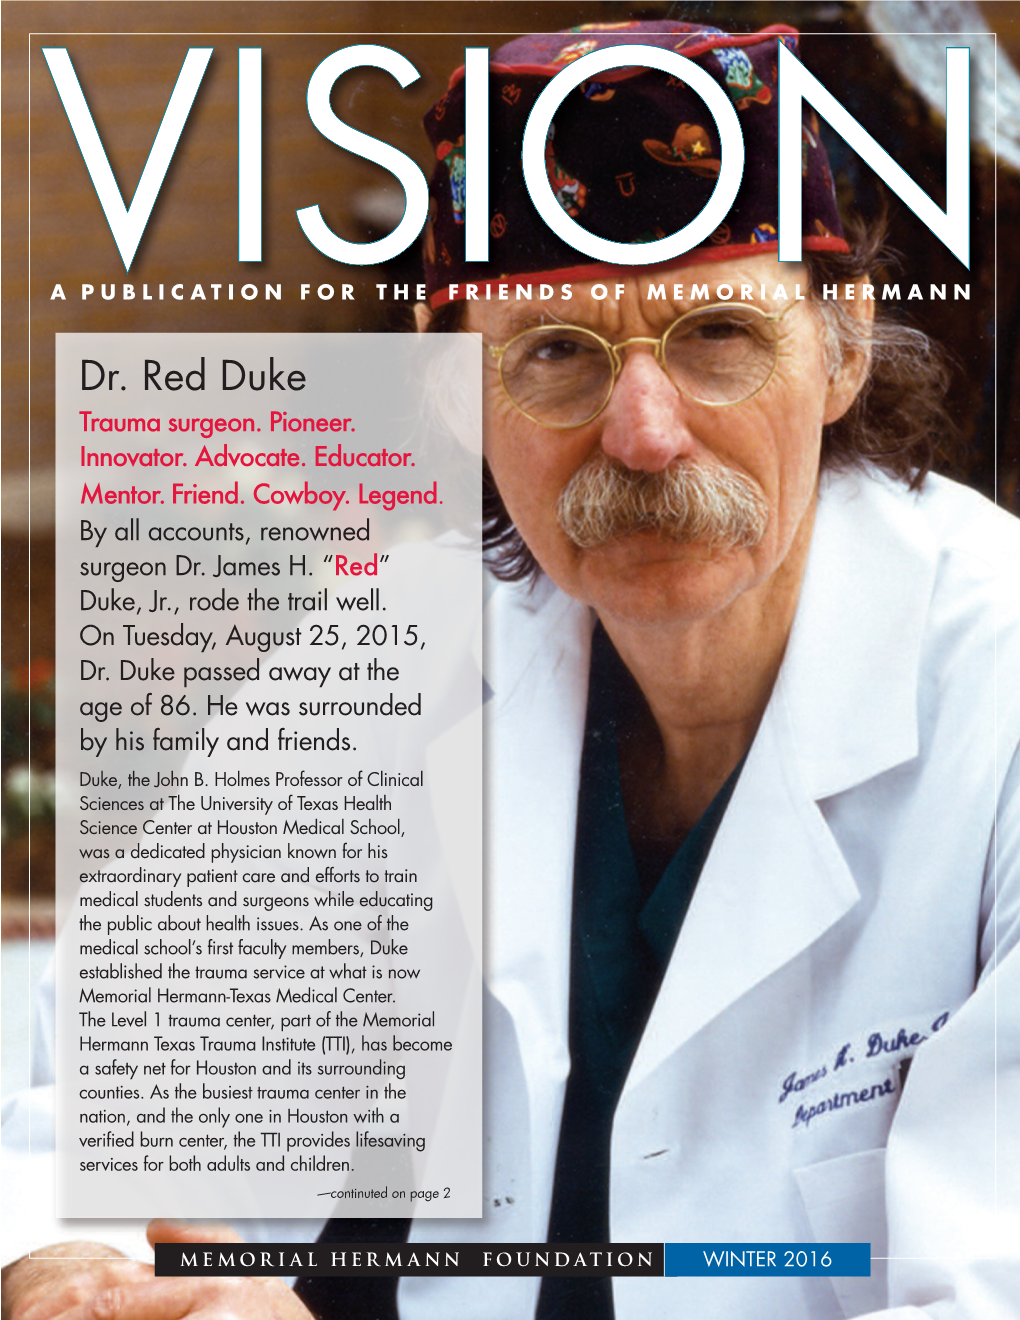 Dr. Red Duke Trauma Surgeon